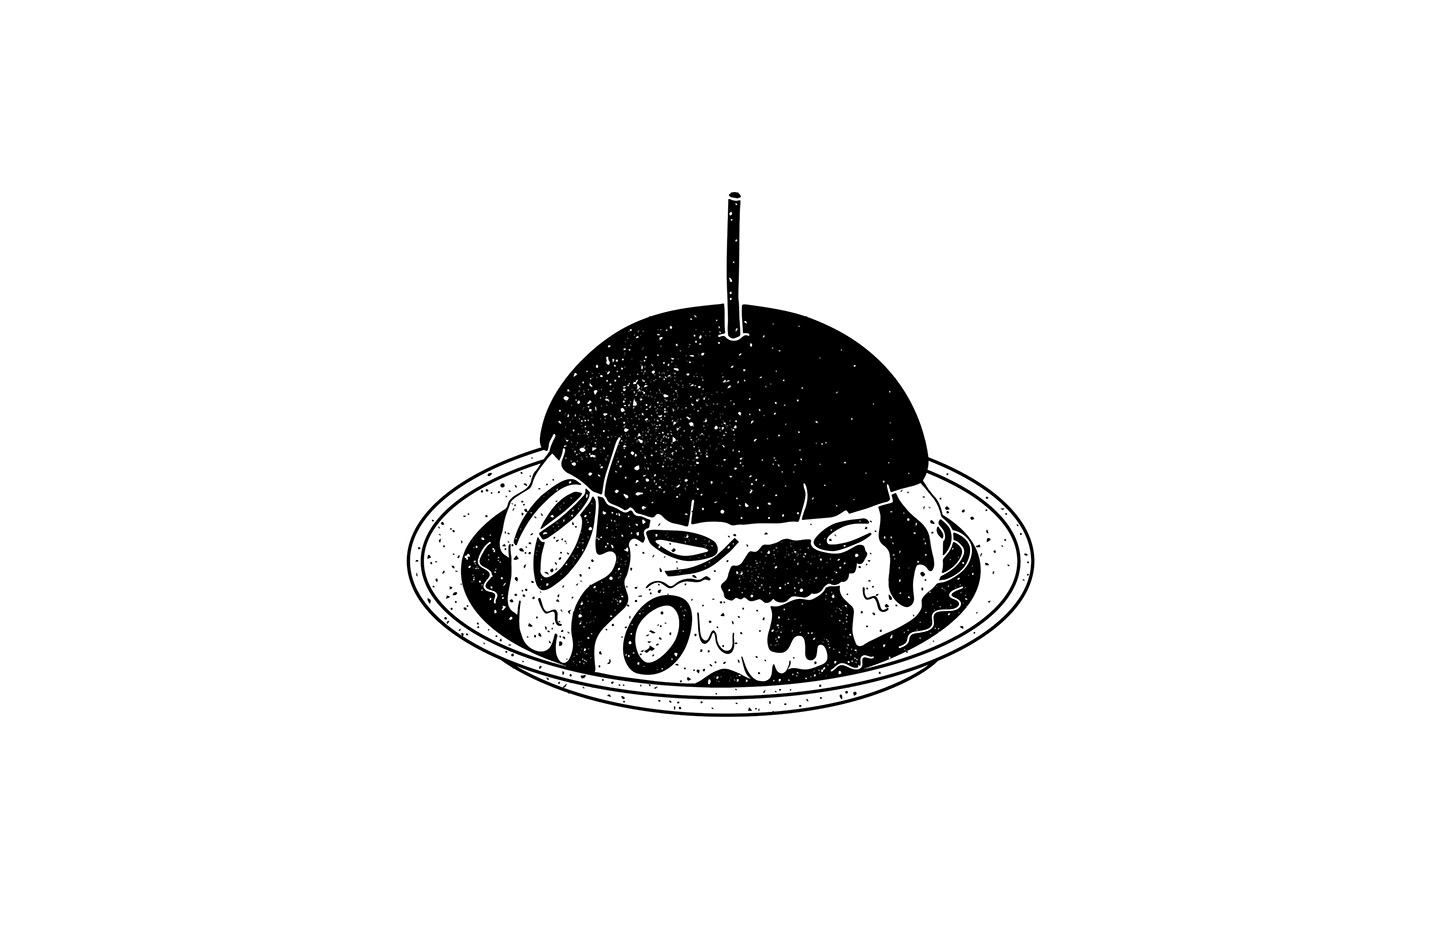 Black_and_white_grunge_burger_illustration_by_Designbite_2